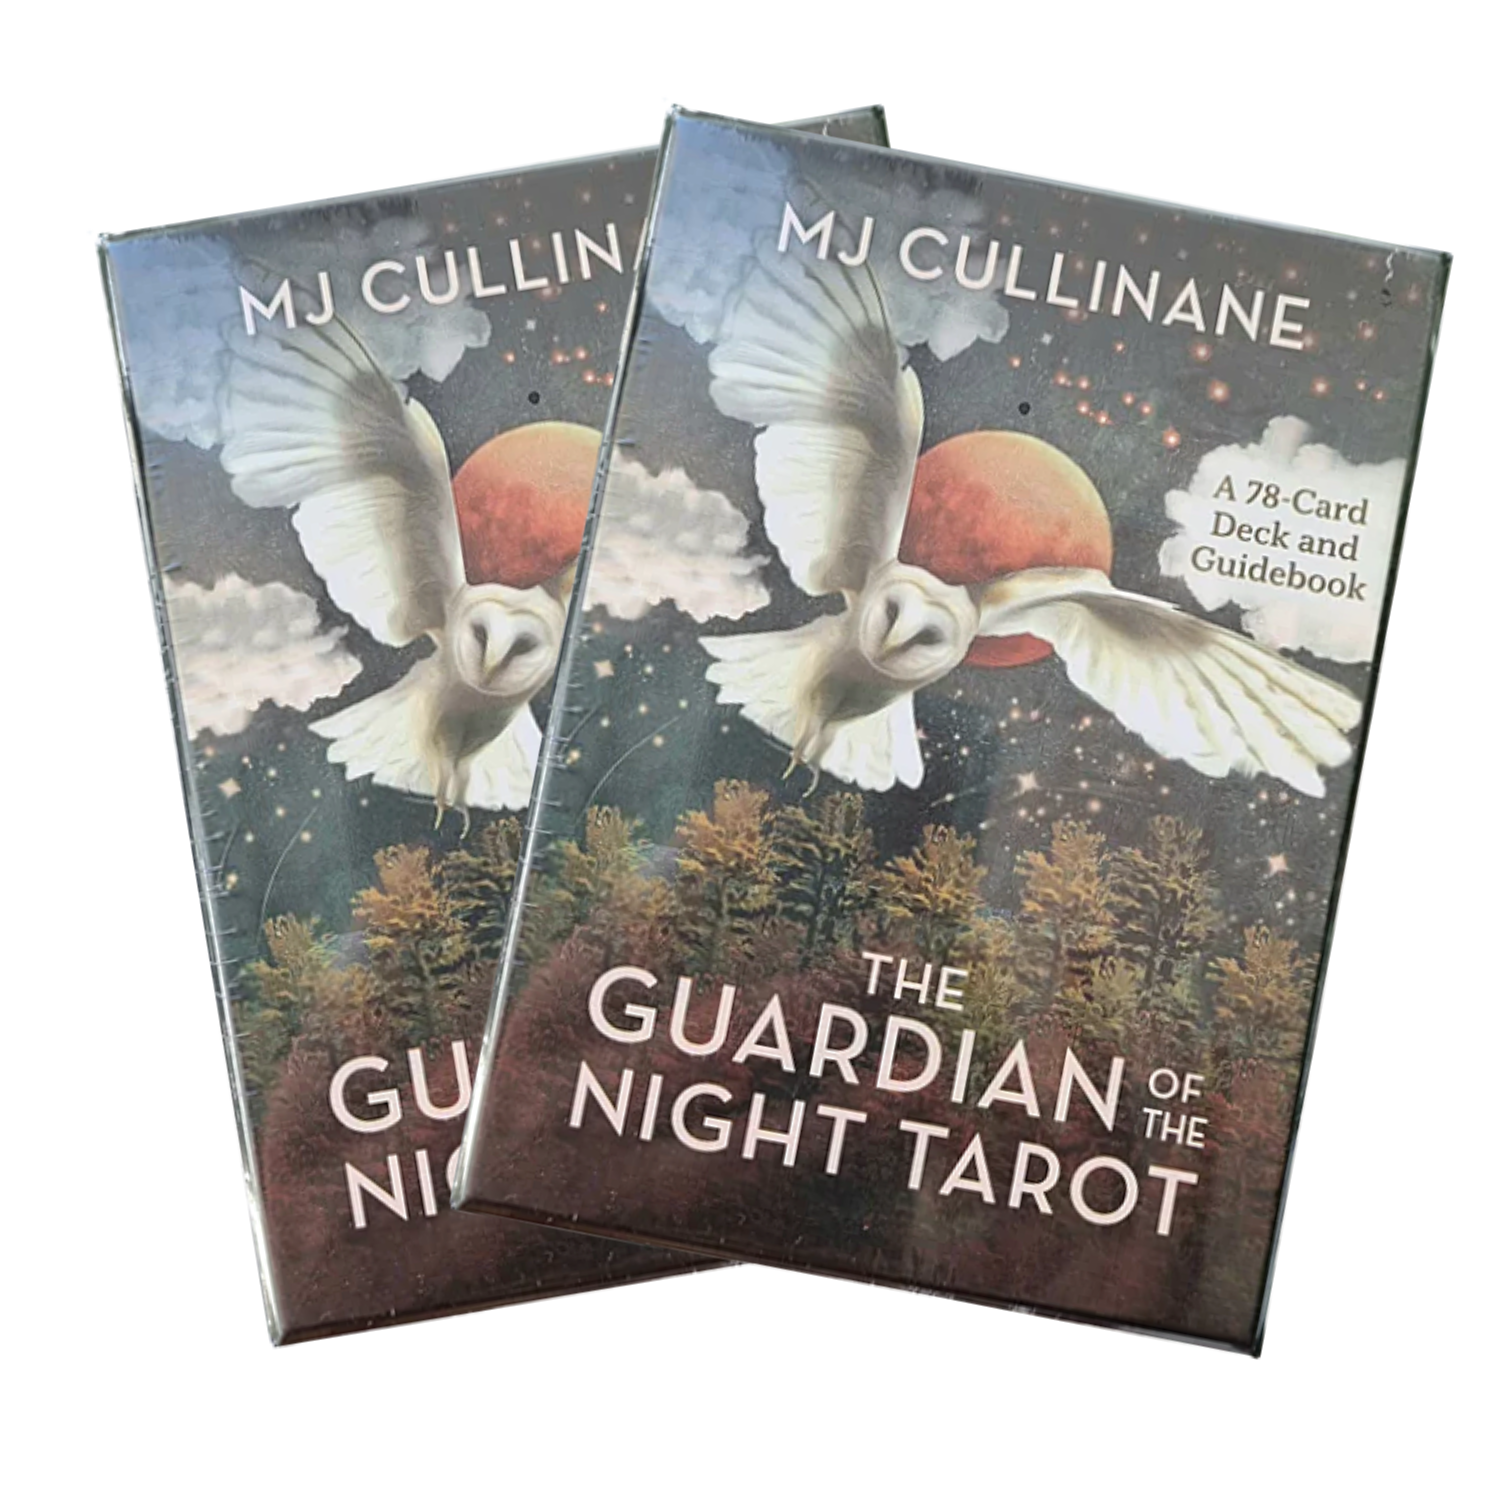 The Guardian of the Night Tarot - MJ Cullinane